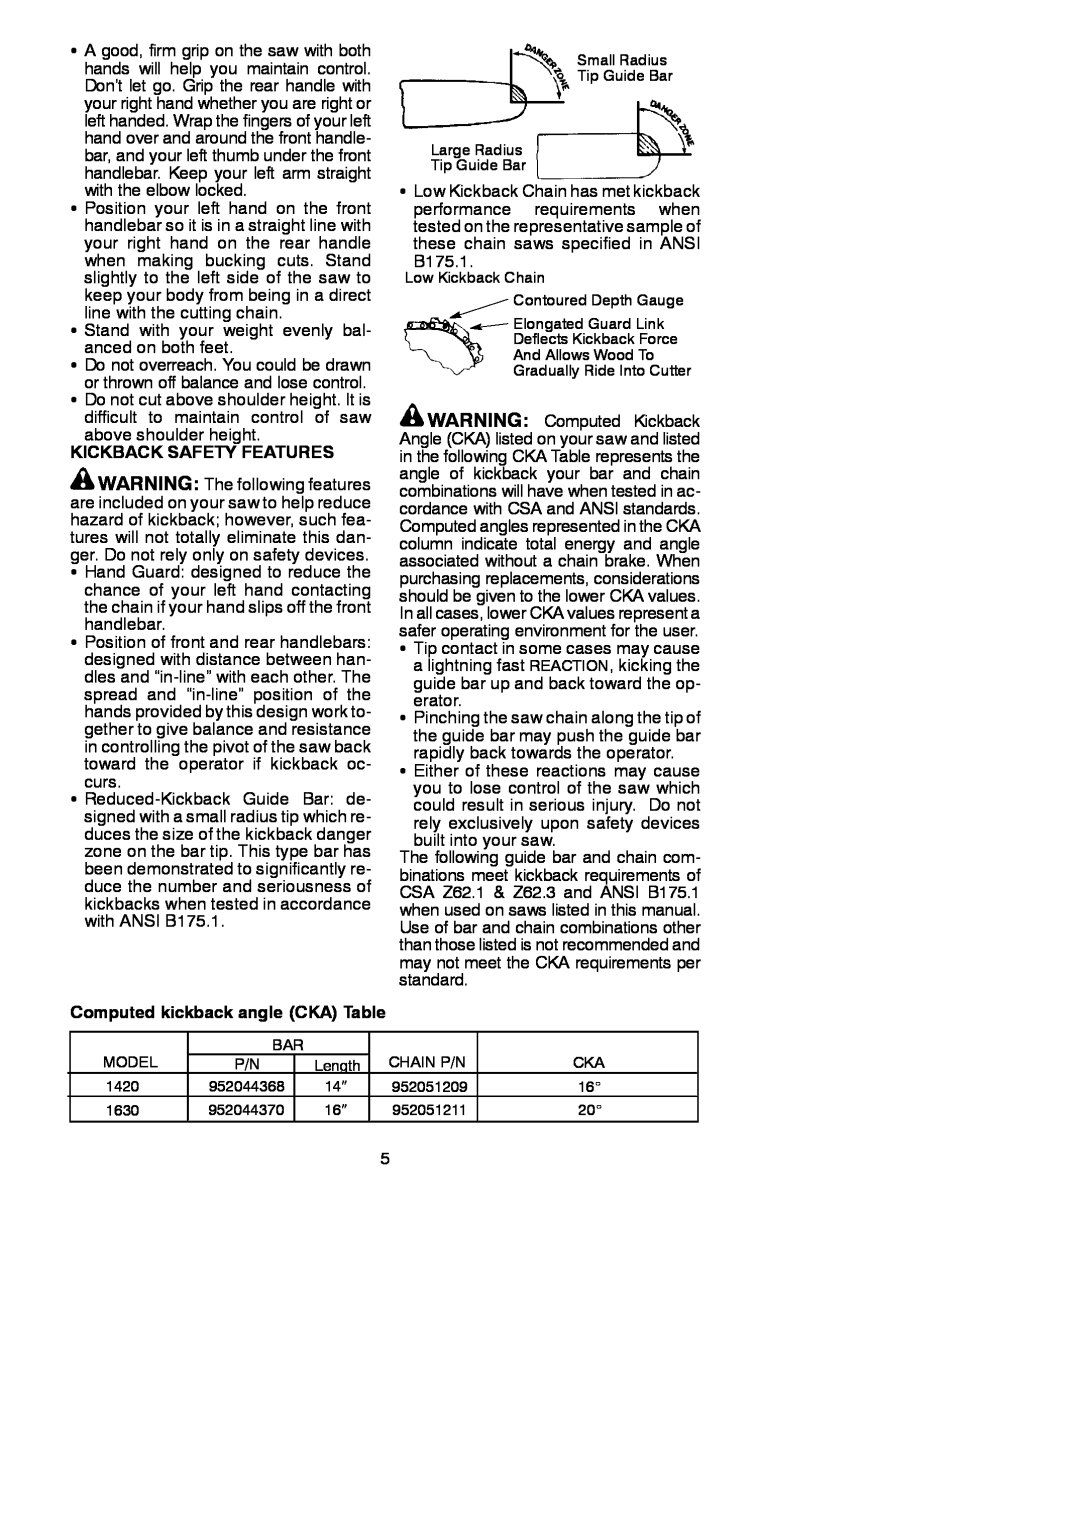 Poulan 1420, 1630 instruction manual Kickback Safety Features, Computed kickback angle CKA Table 